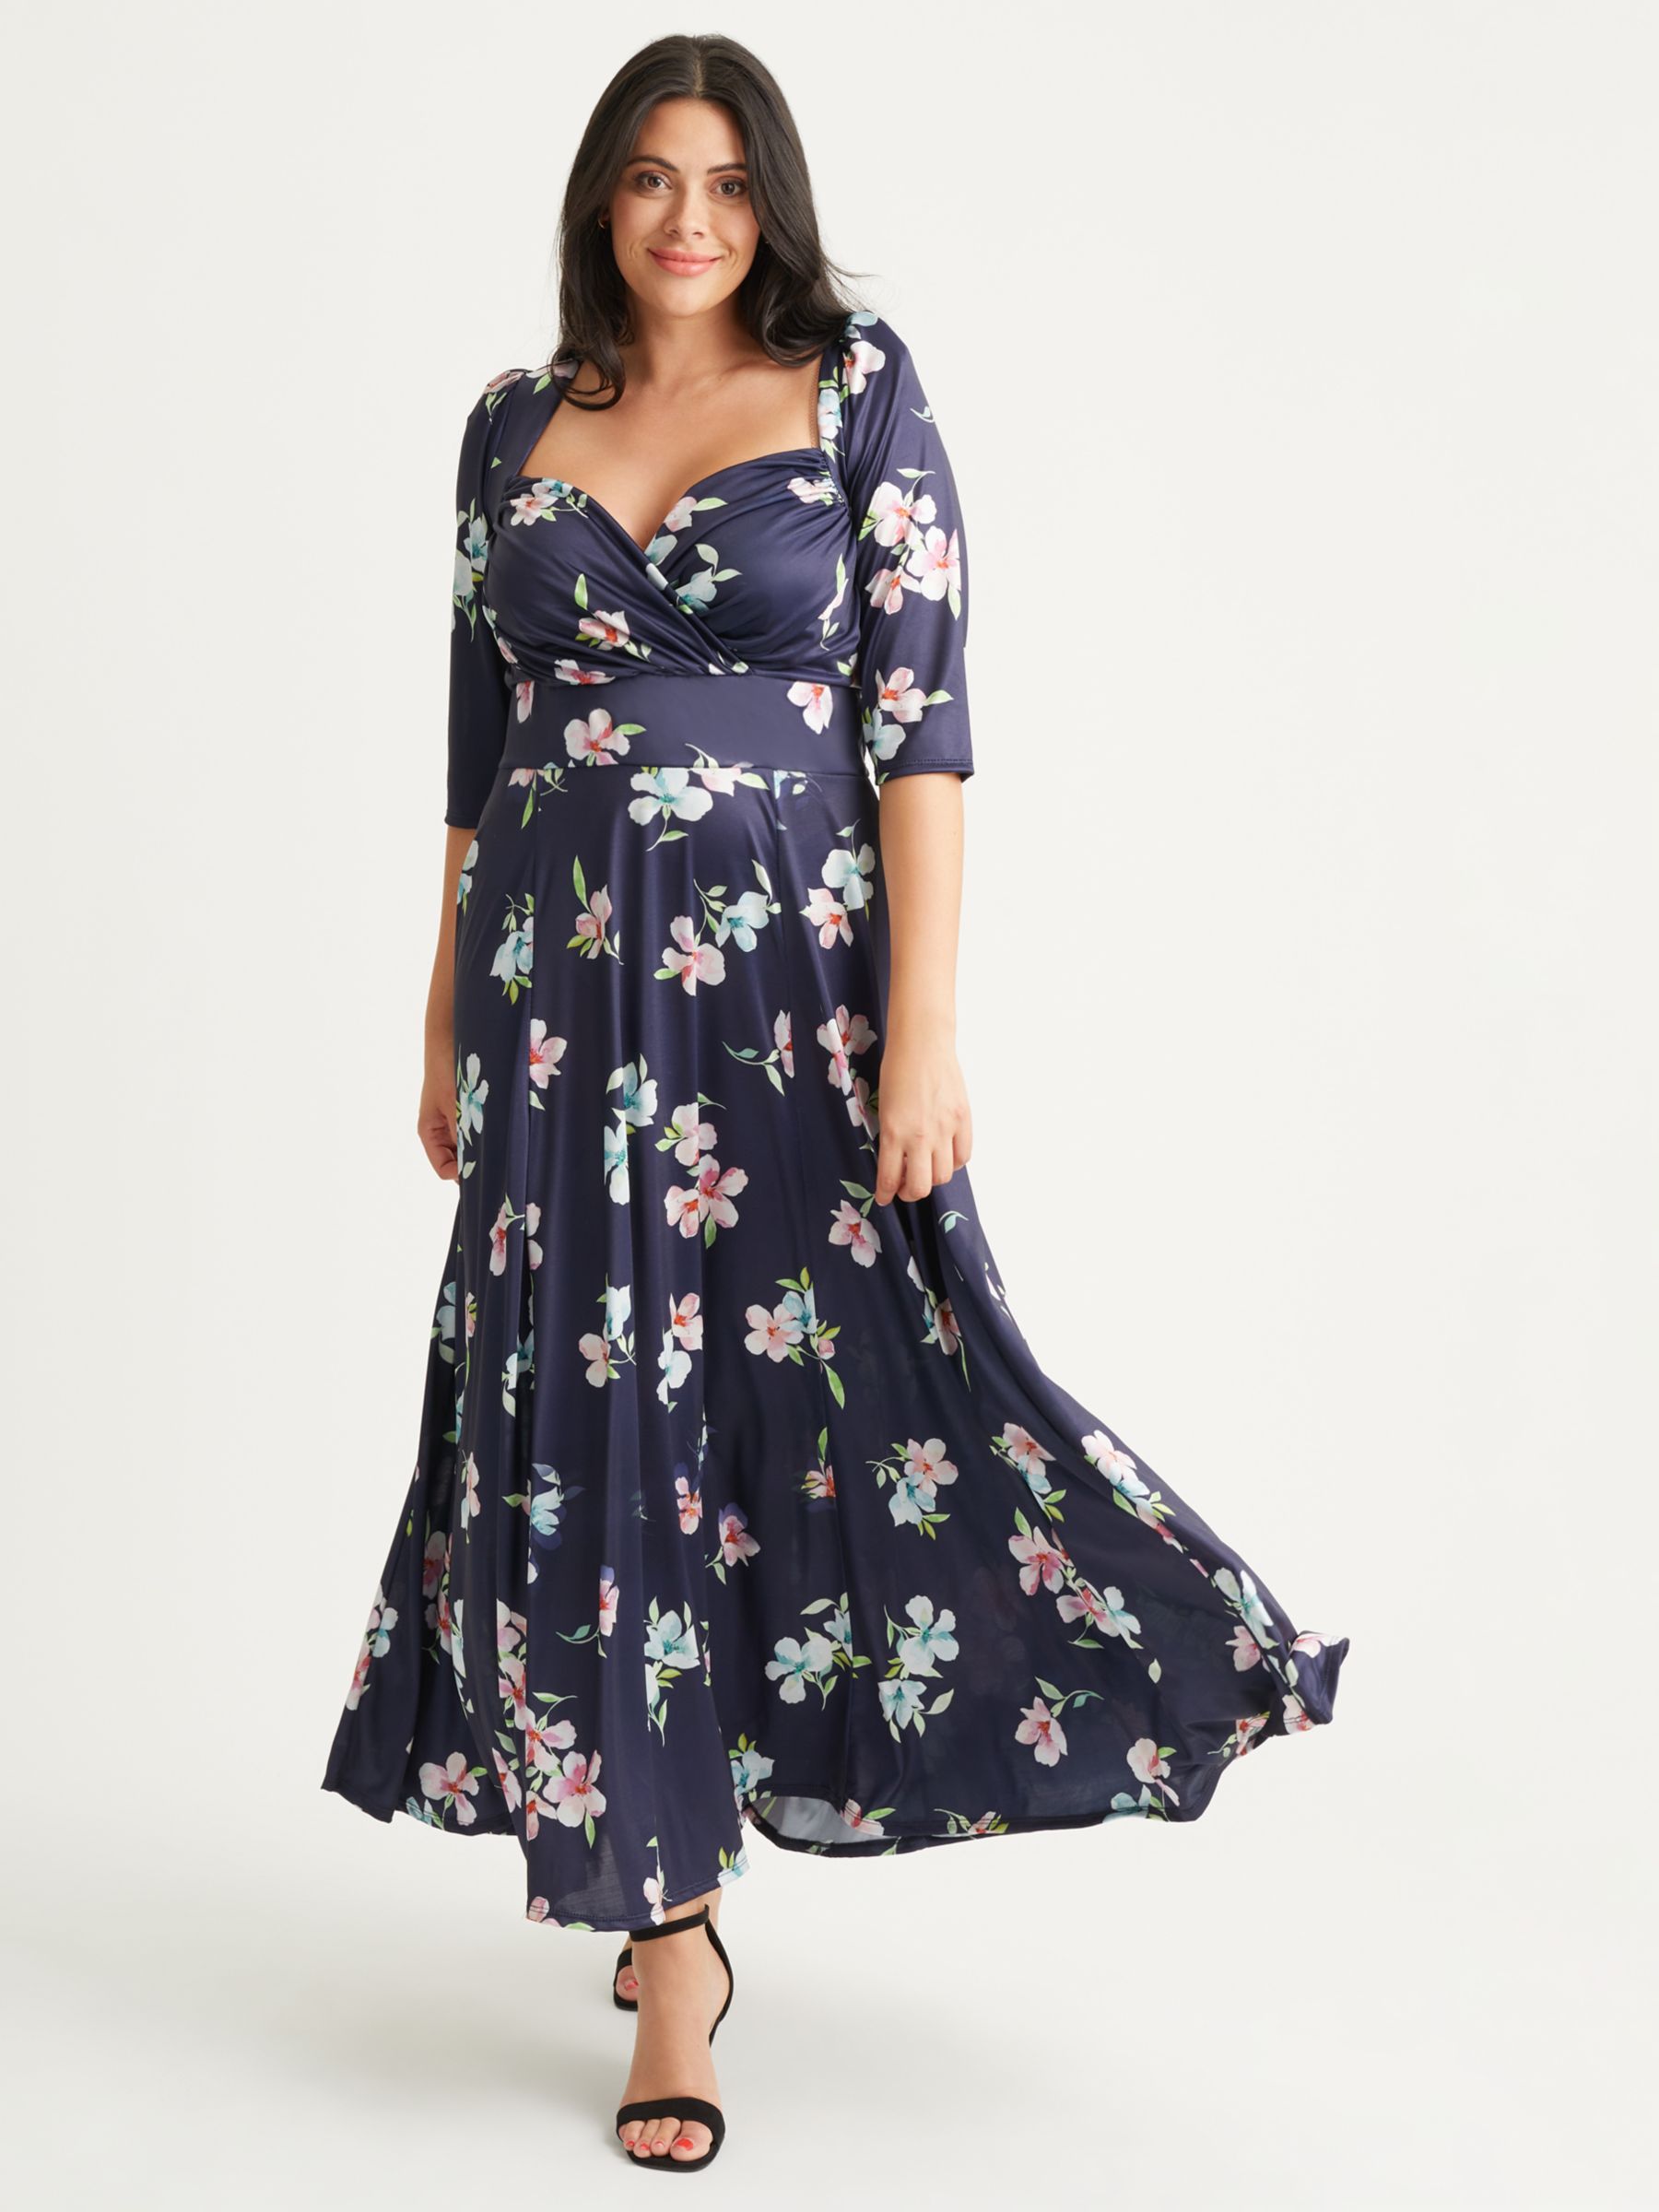 цена Атласное платье макси Elizabeth с цветочным принтом Scarlett & Jo, темно-синий/мульти